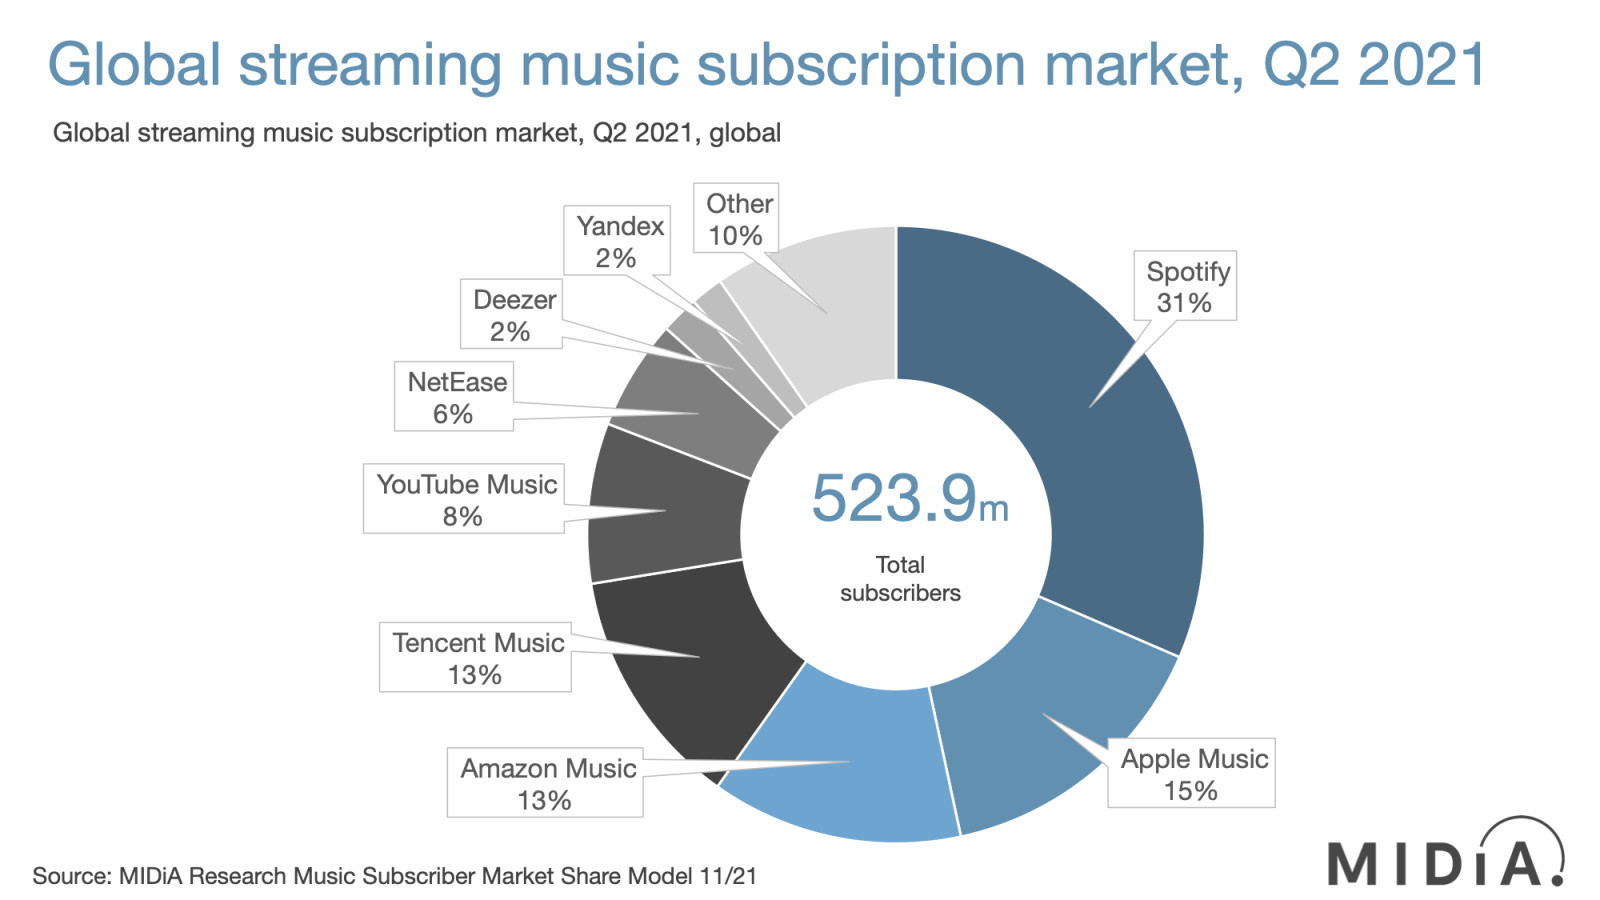 显示音乐流媒体市场份额百分比的饼图：Spotify 占 31%，Apple Music 占 15%，Amazon Music 占 13%，腾讯占 13%，Youtube Music 占 8%。